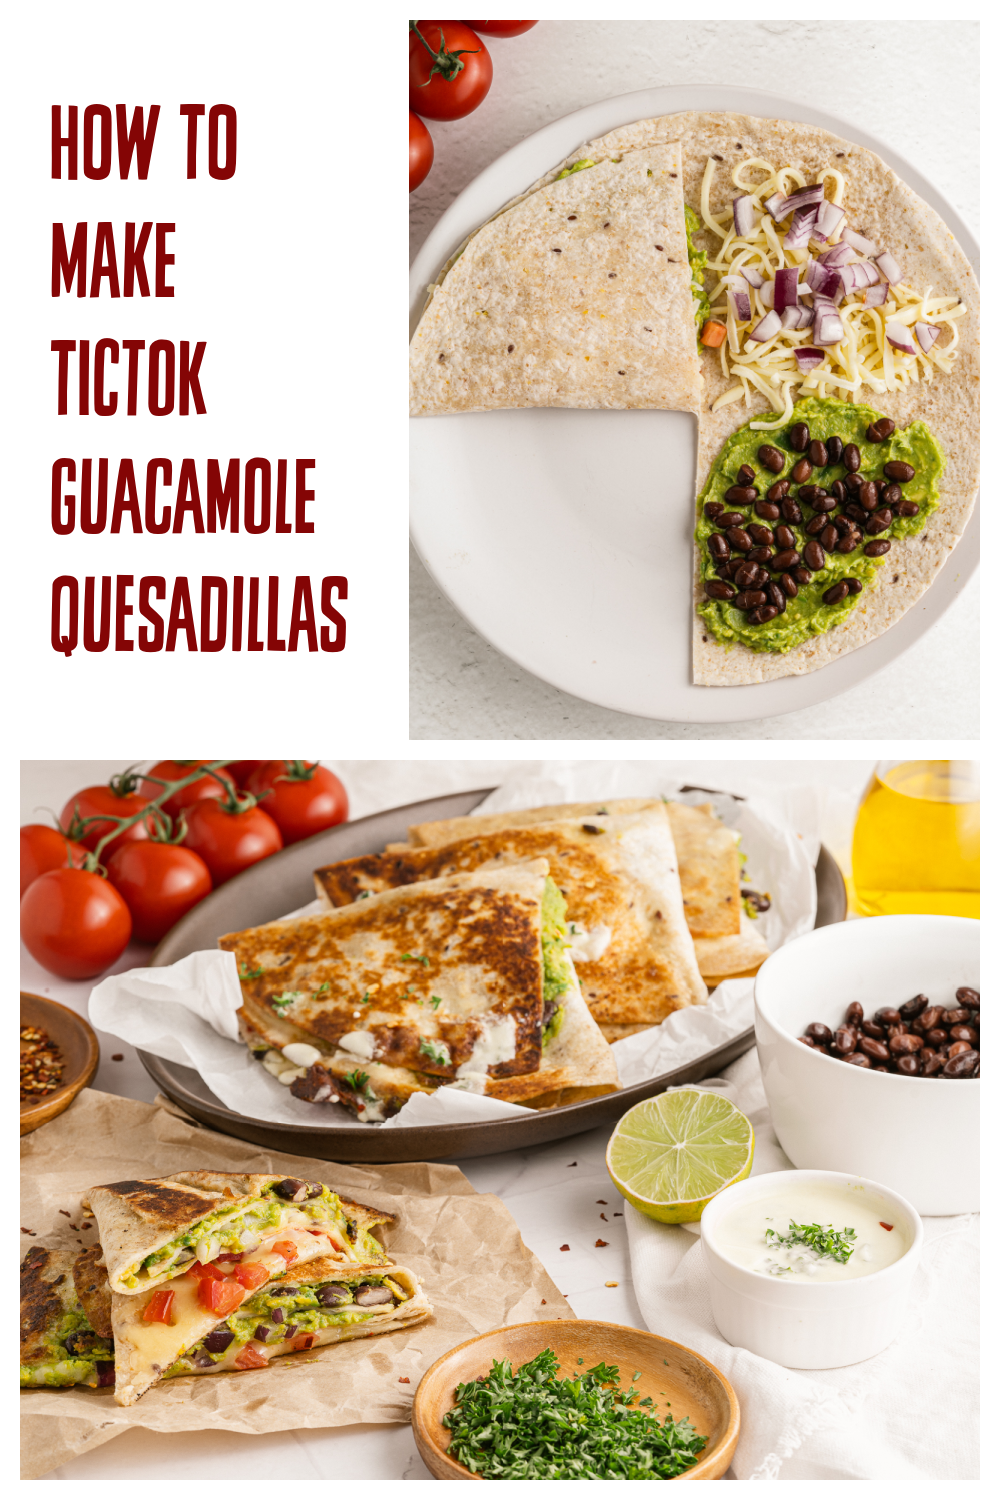 How to make Tik Tok Guacamole Quesadillas step by step #TIKTOK #QUESADILLAS.